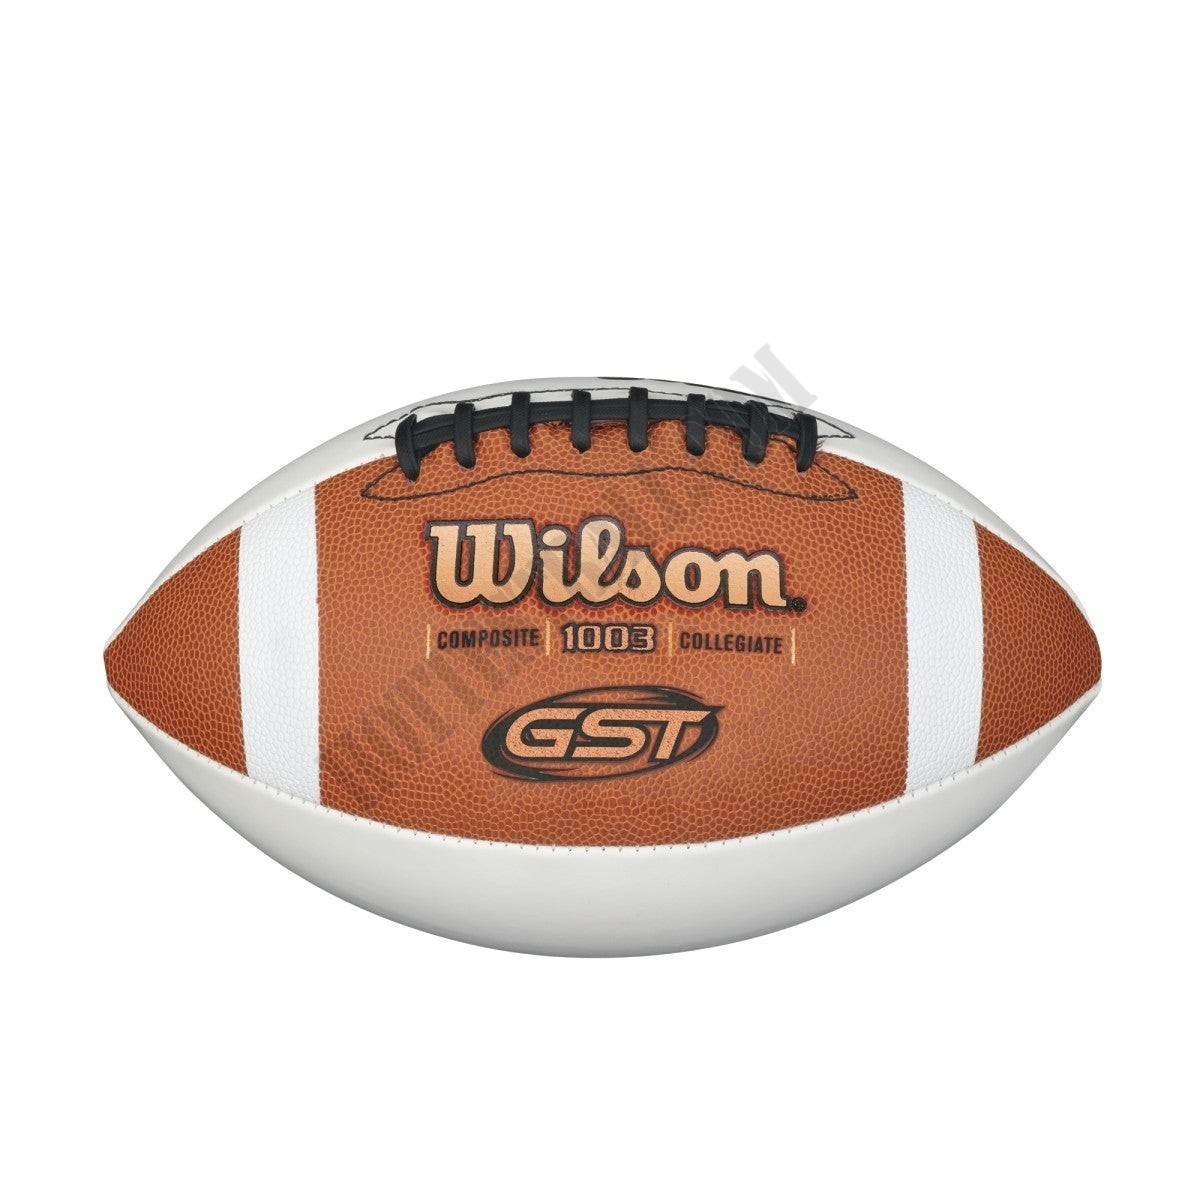 GST Autograph Composite Football - Official Size - Wilson Discount Store - -0